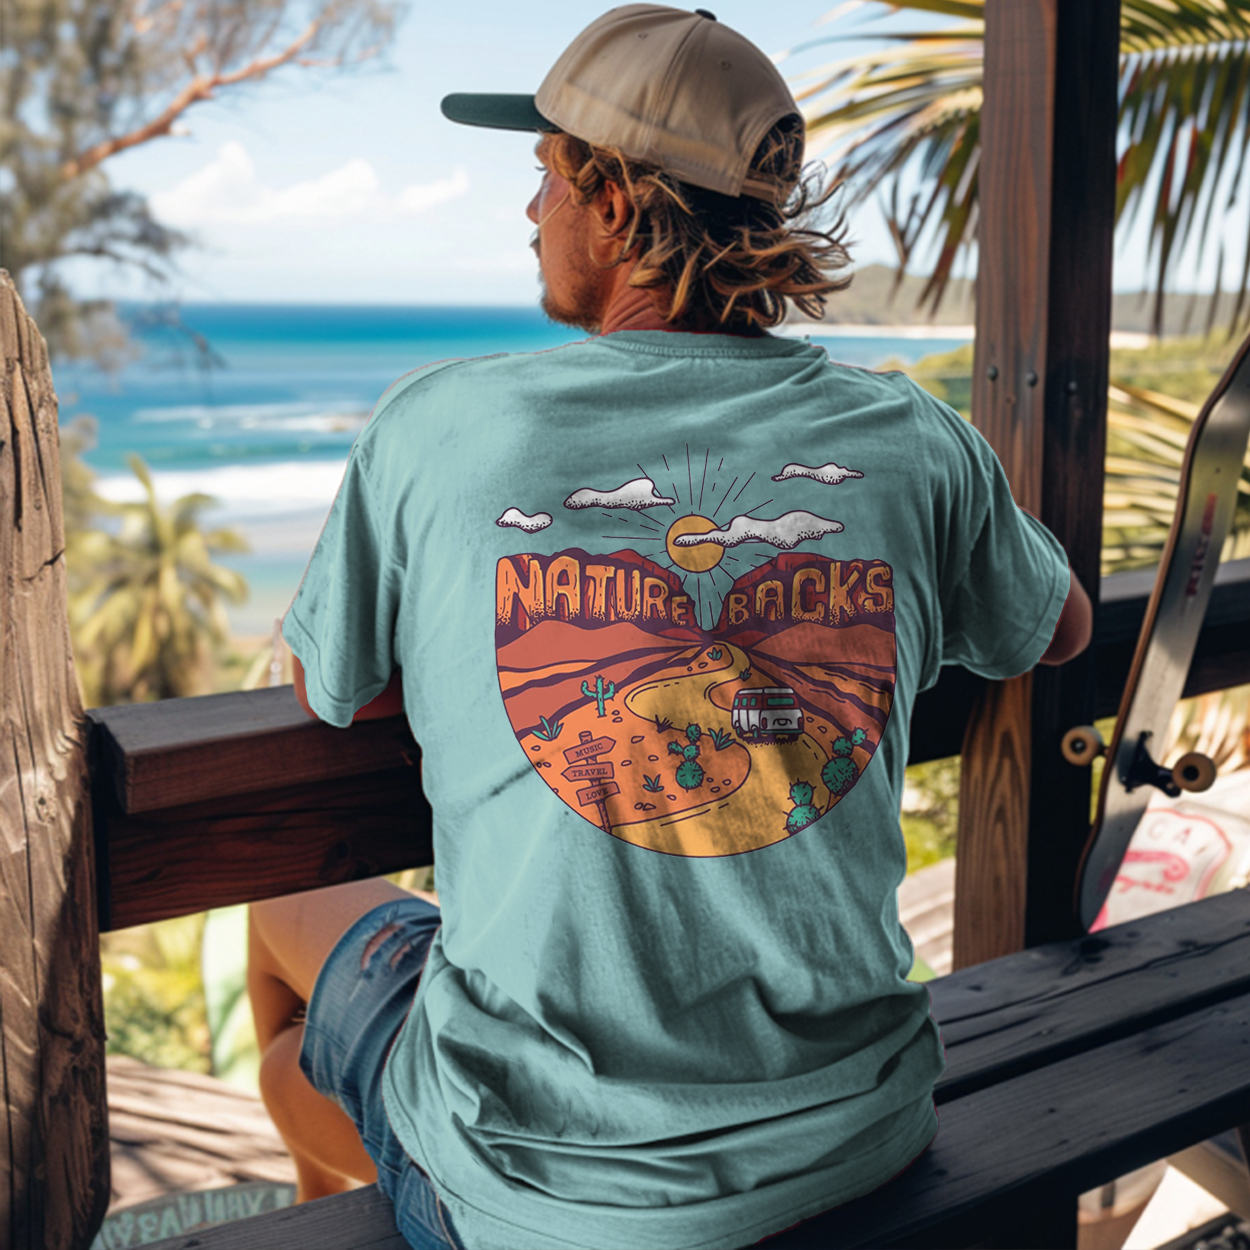 Unisex Vintage Holiday Travel Surfwear Printed T-Shirt